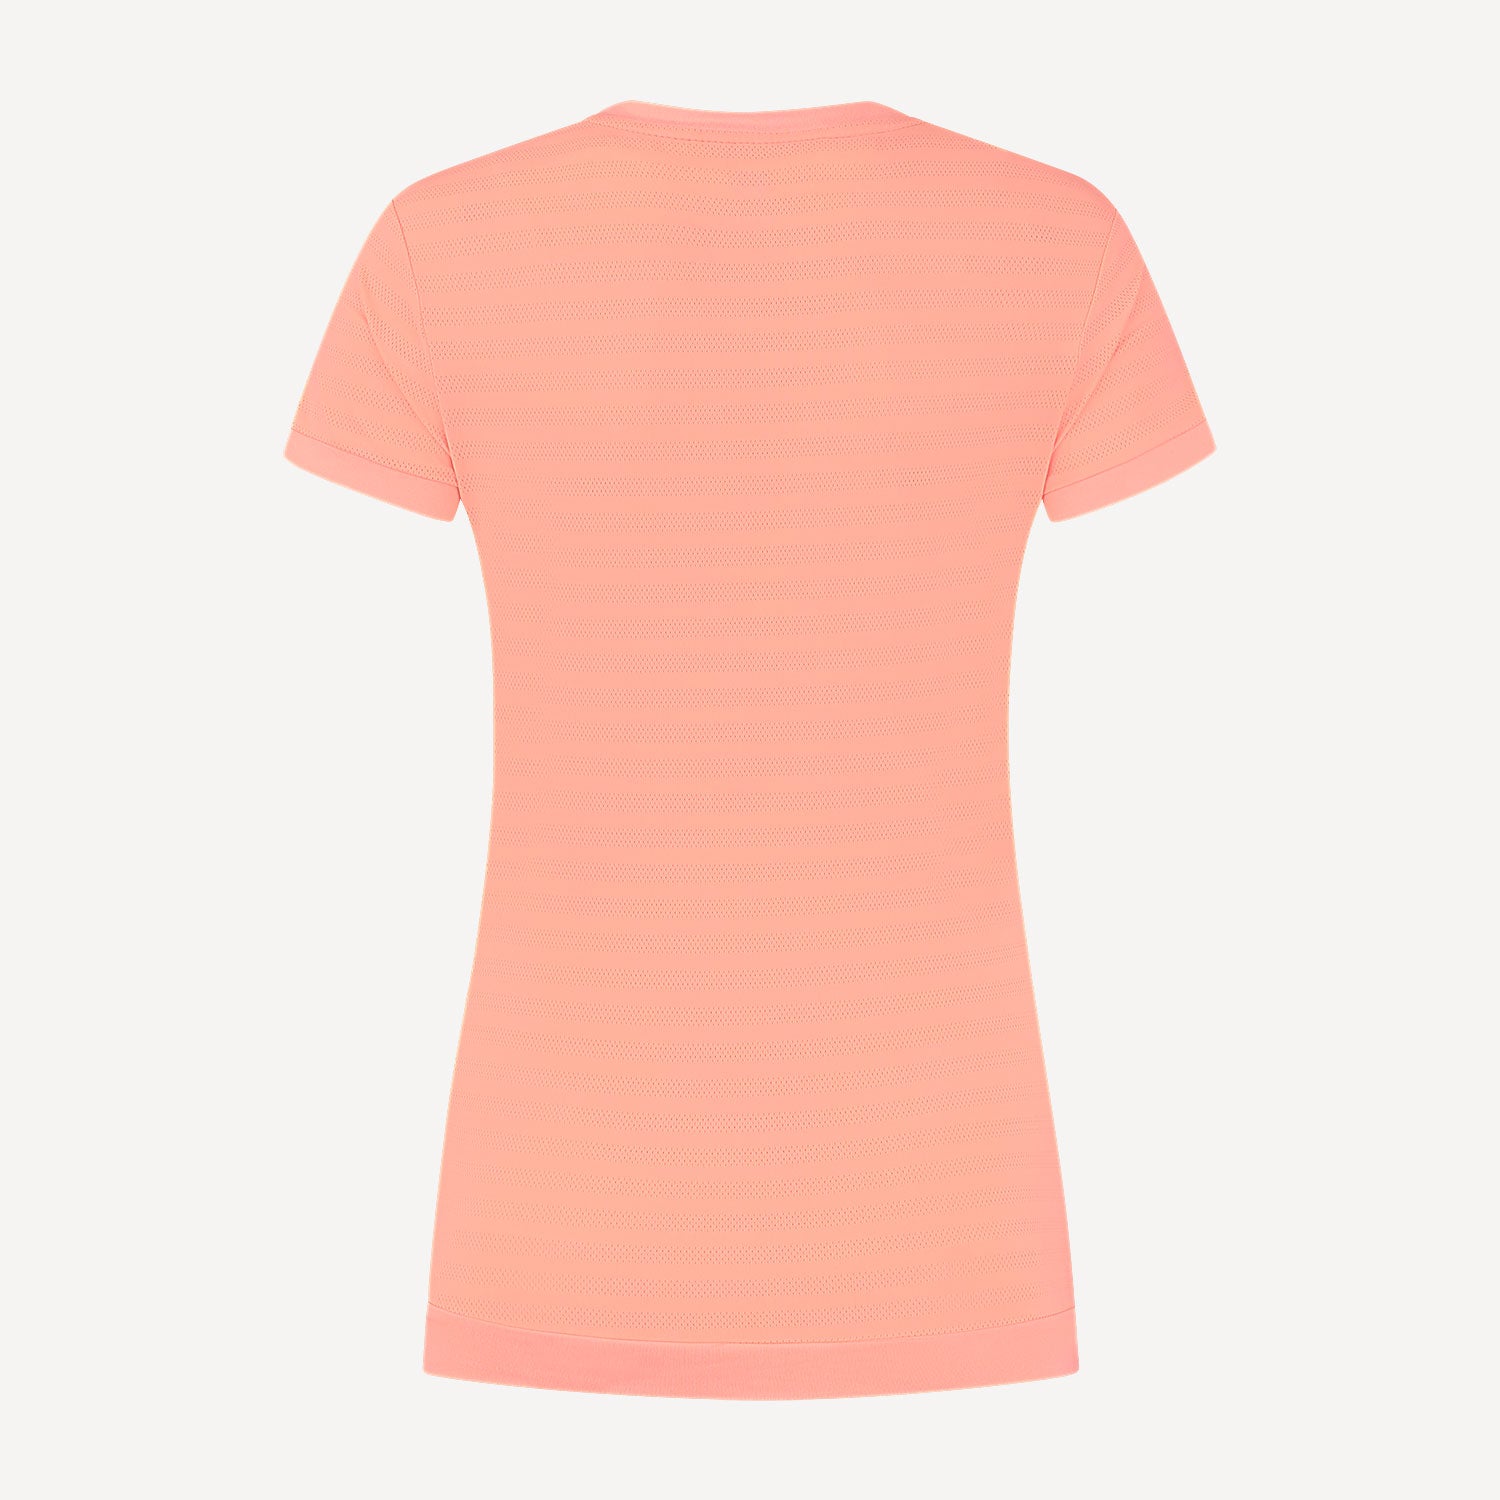 K-Swiss Hypercourt Women's V-Neck Tennis Shirt Orange (2)